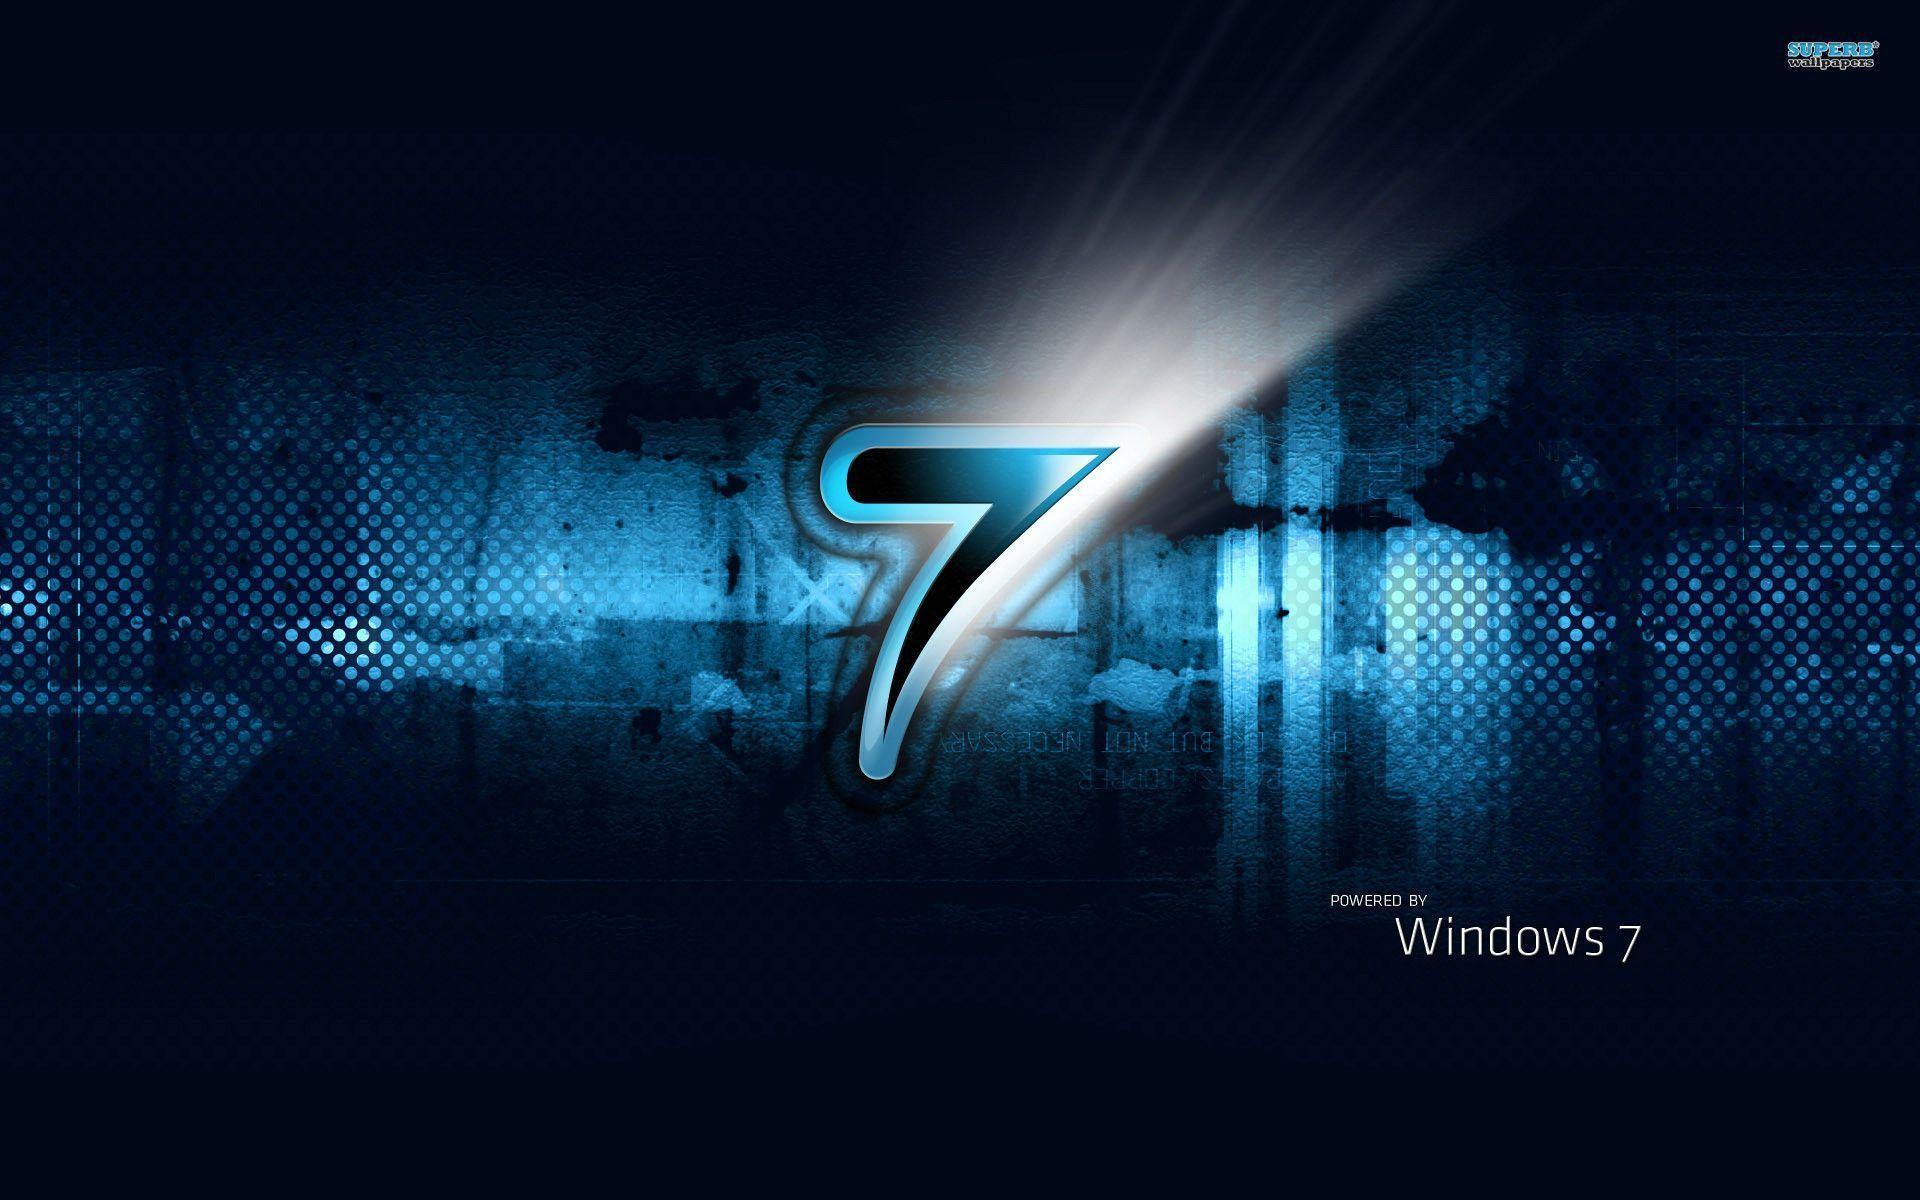 windows 7 widescreen HD wallpaper. Desktop Background for Free